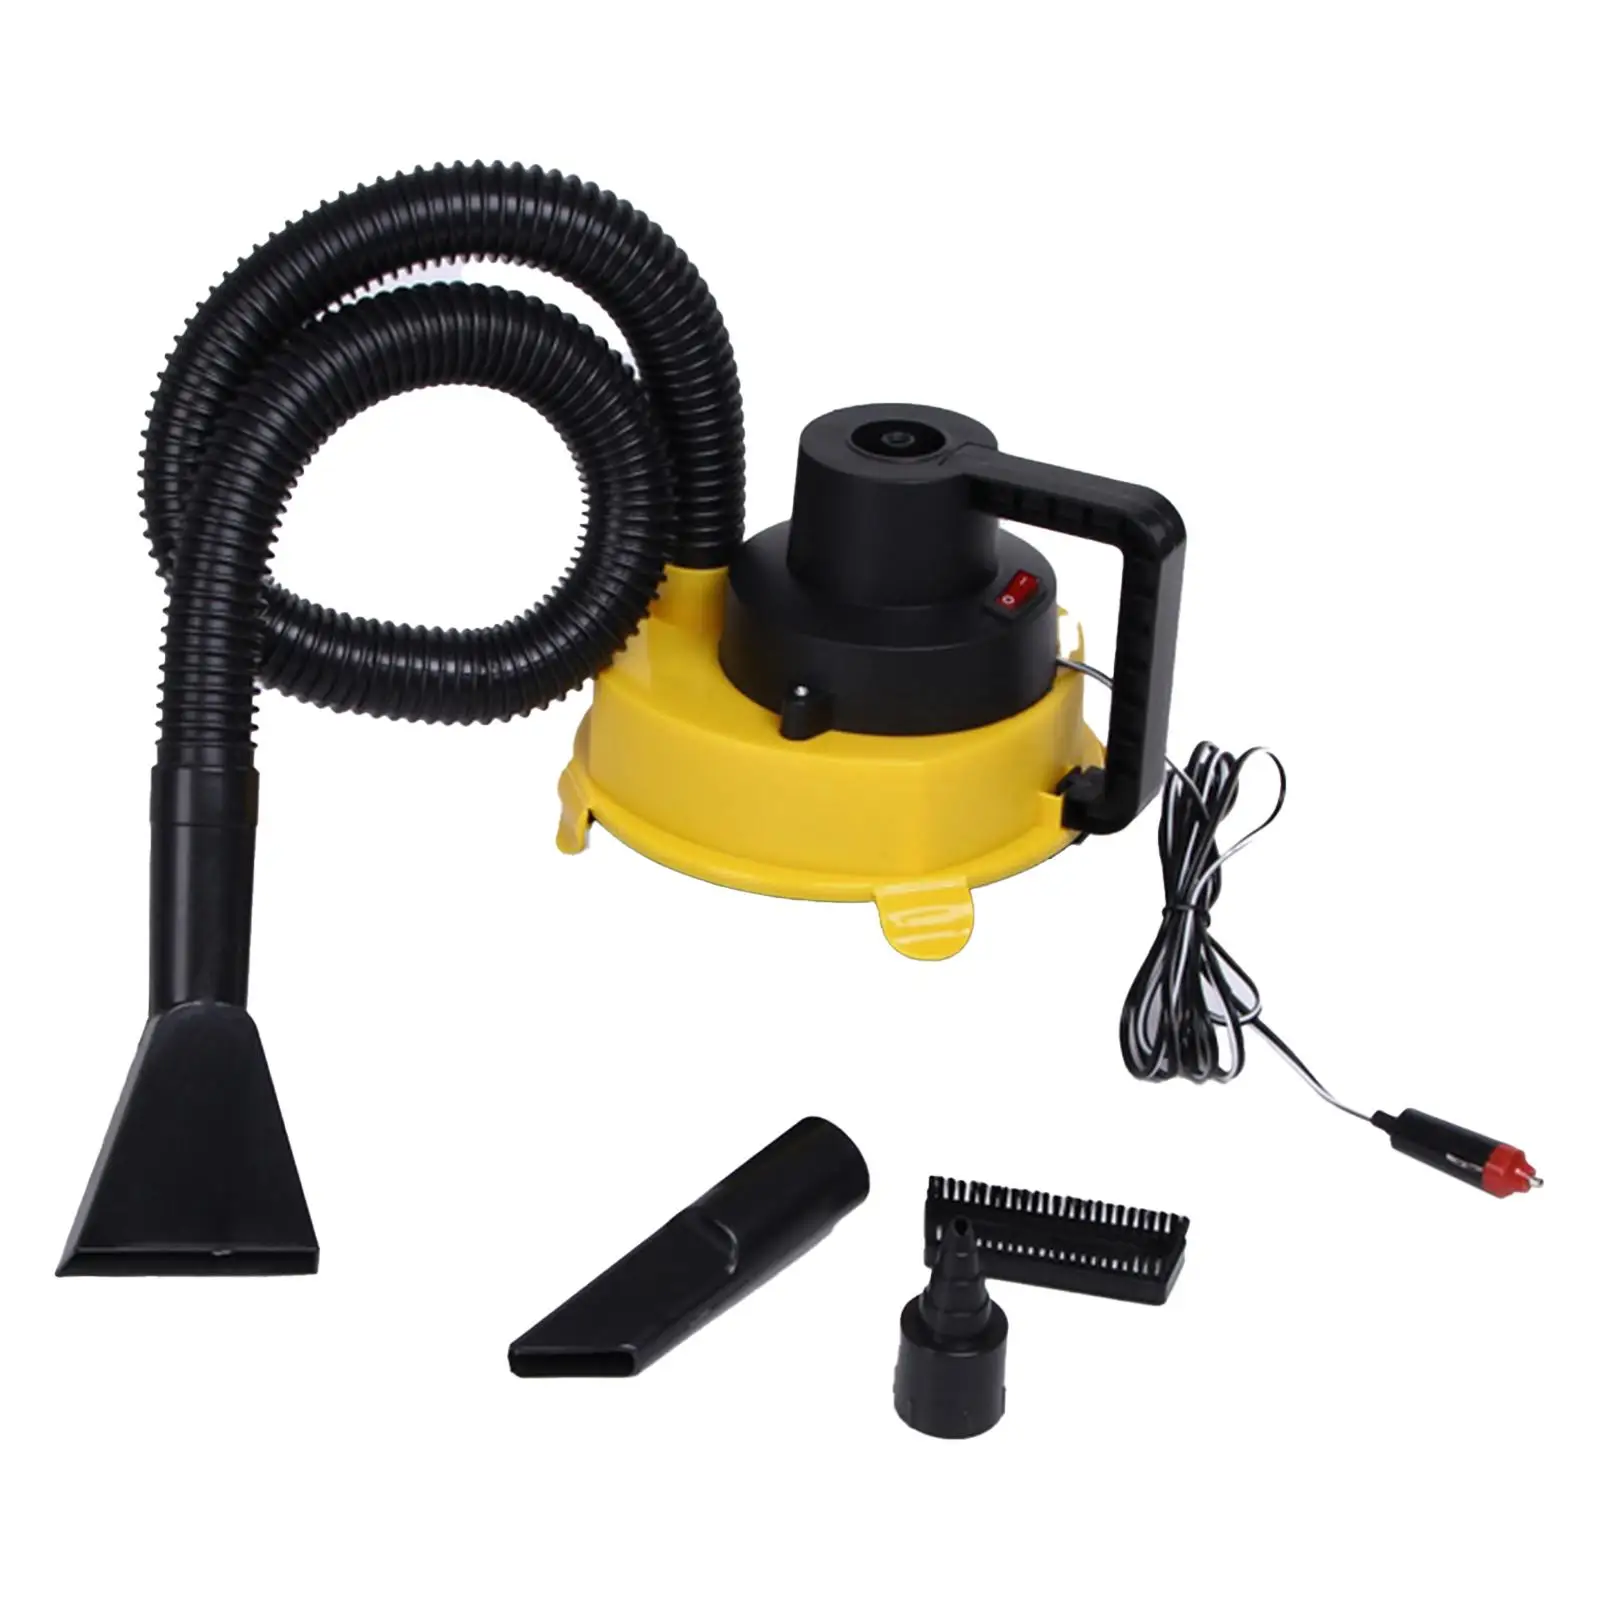 Car Vacuum Cleaner Lightweight Washable 12V Dust Buster Handheld Duster Dust Vacuum Cleaner for Camper Boat Vehicle RV